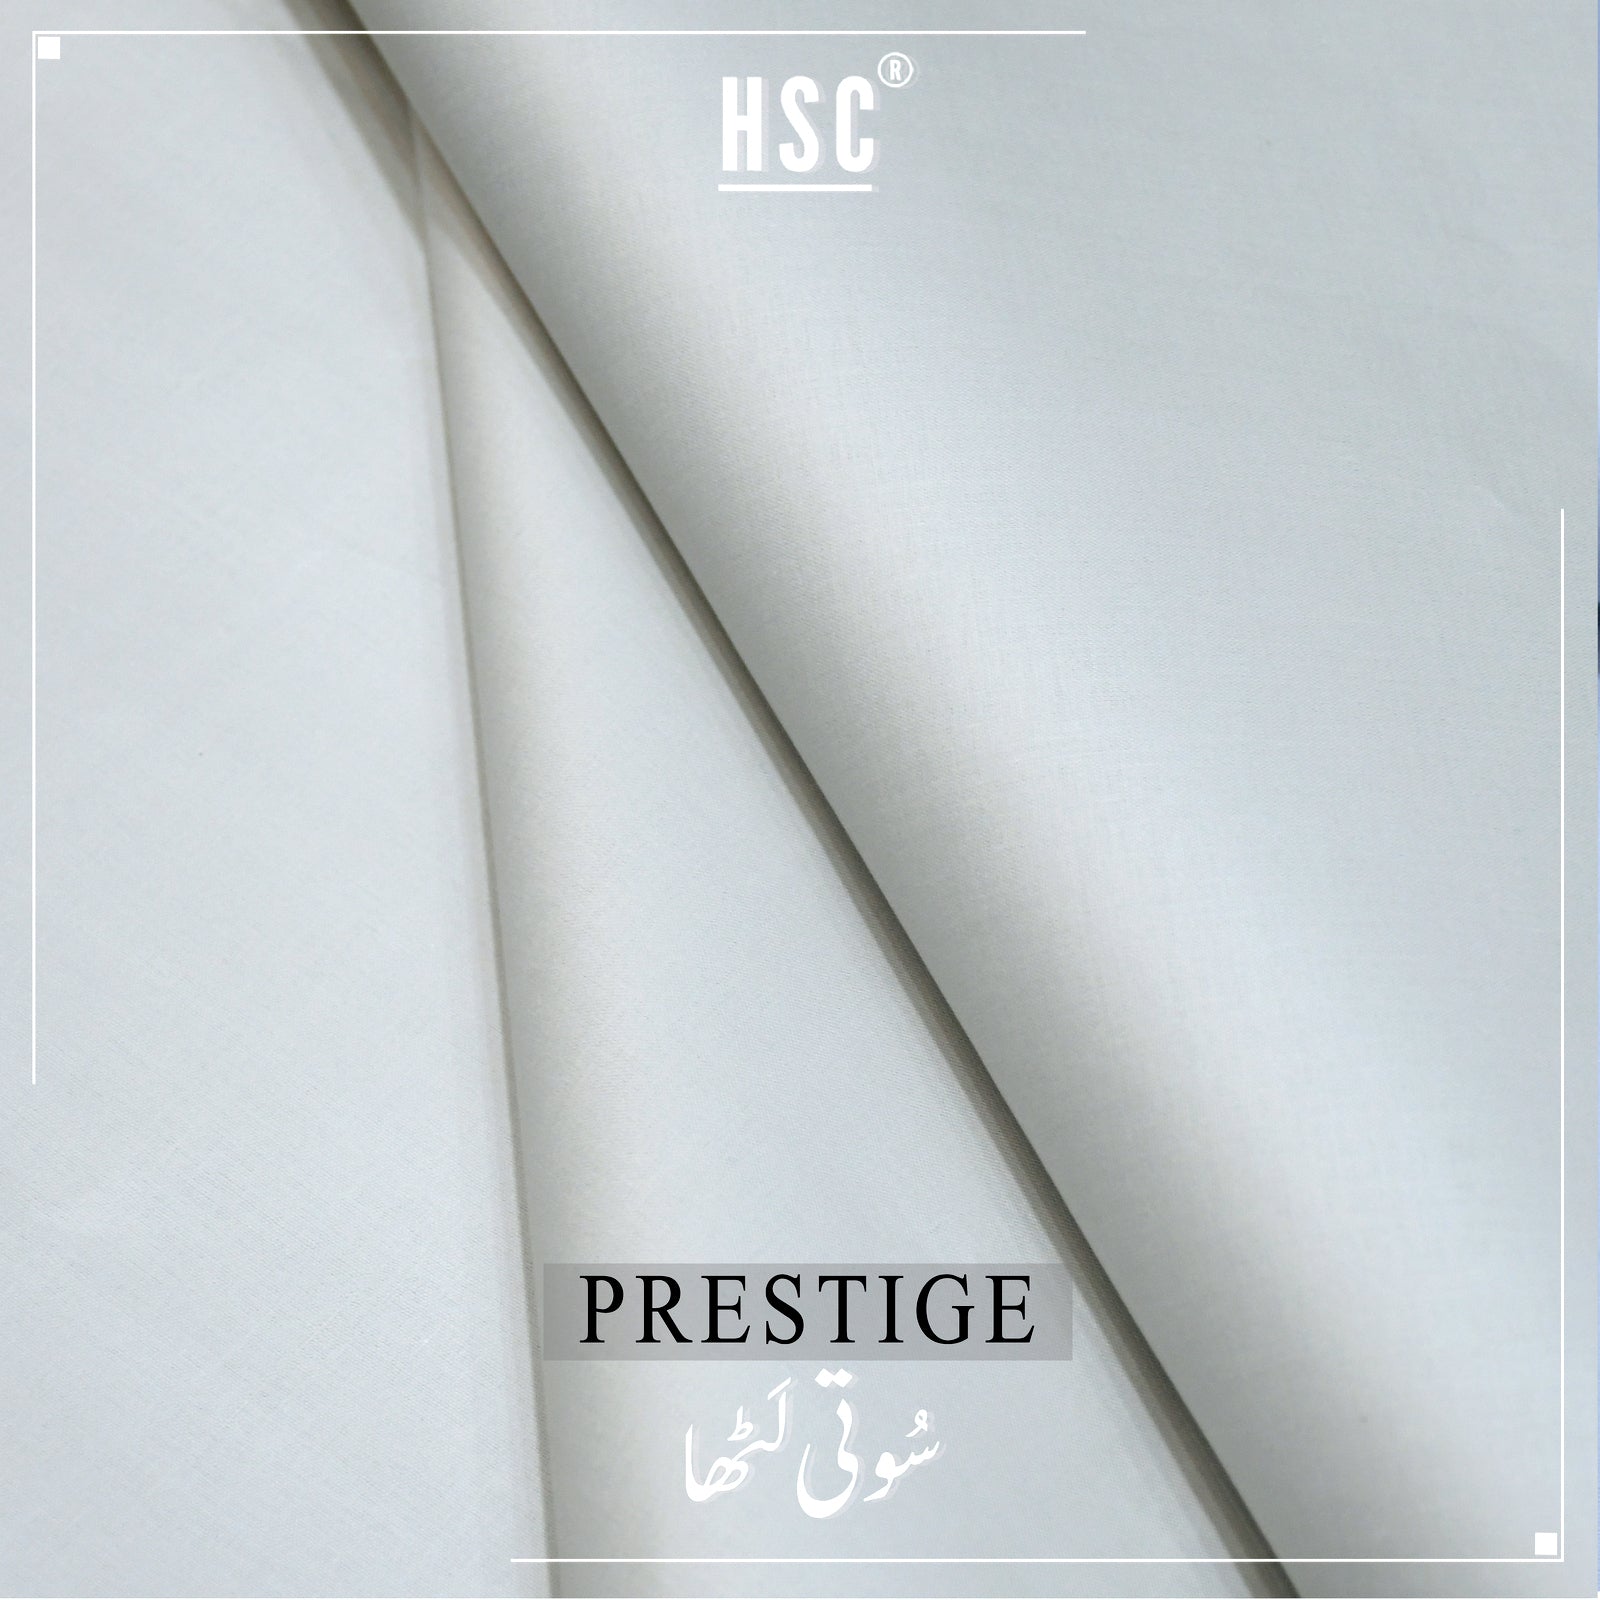 Buy1 Get 1 Free Prestige Pure Cotton Latha - SEL4 HSC